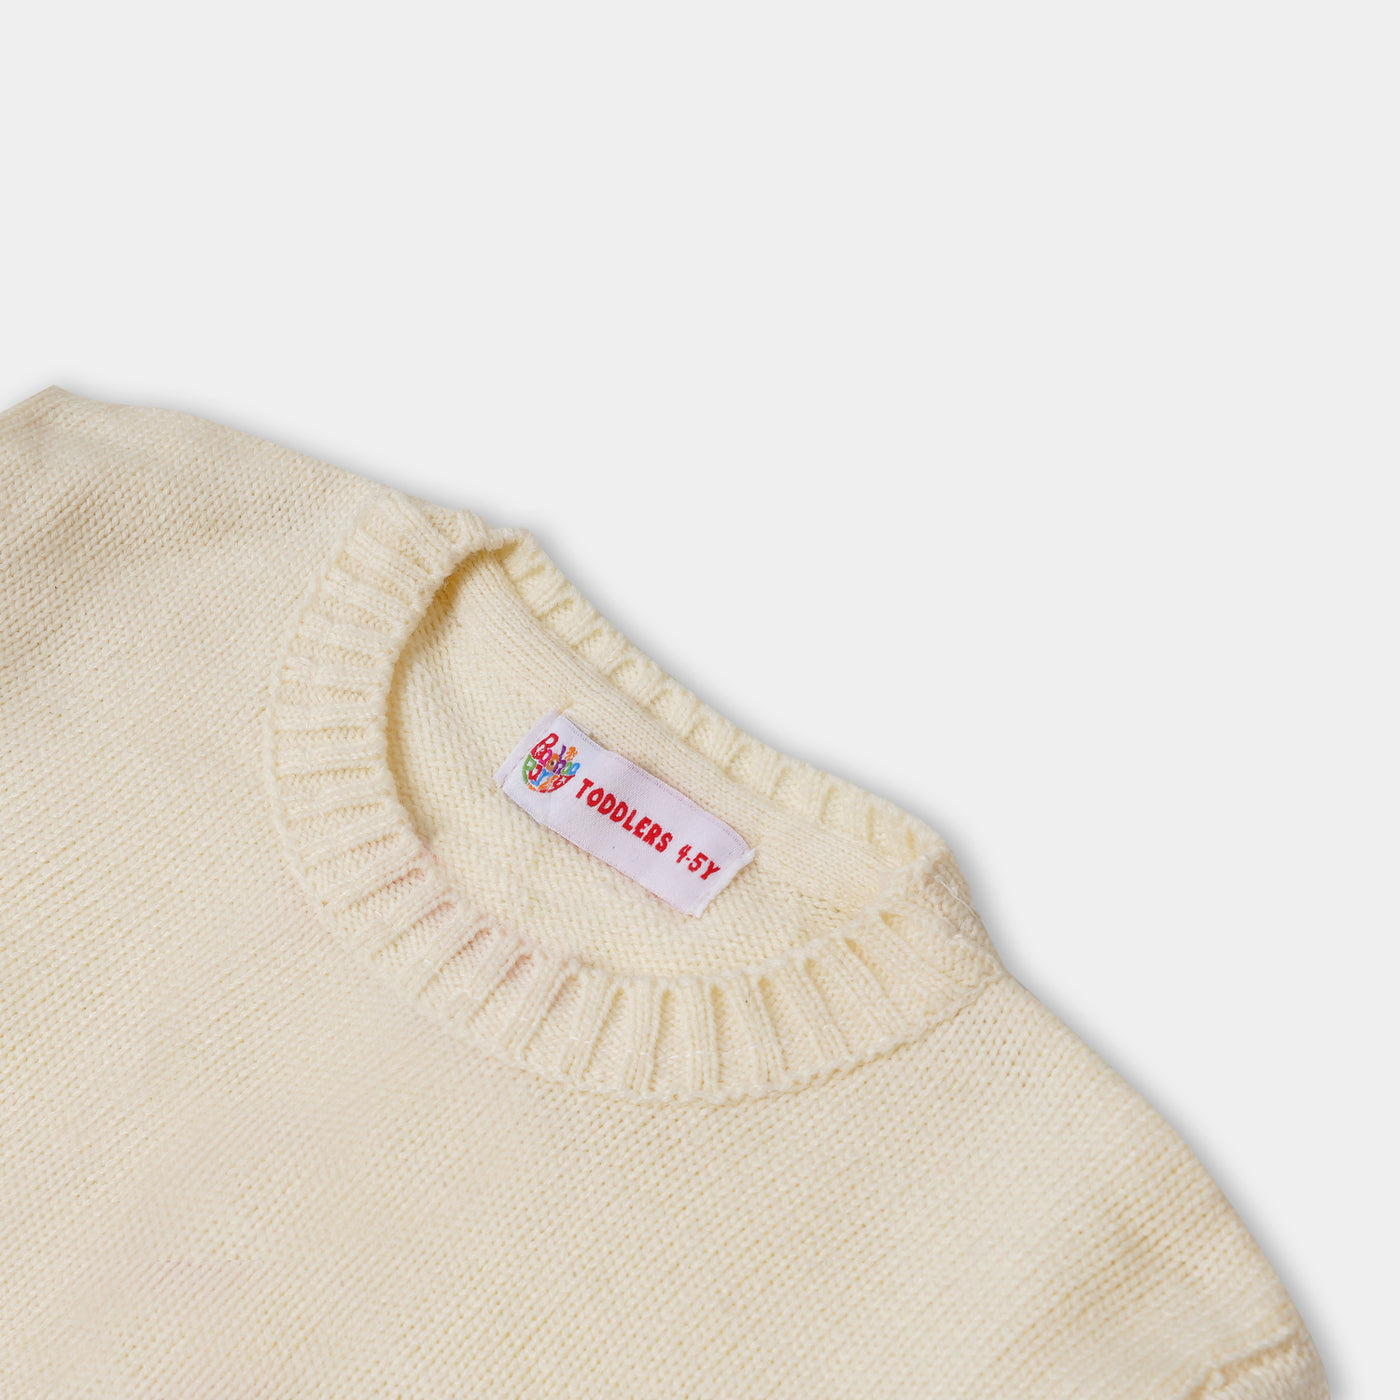 Boys Sweater BP04-22 - MIX